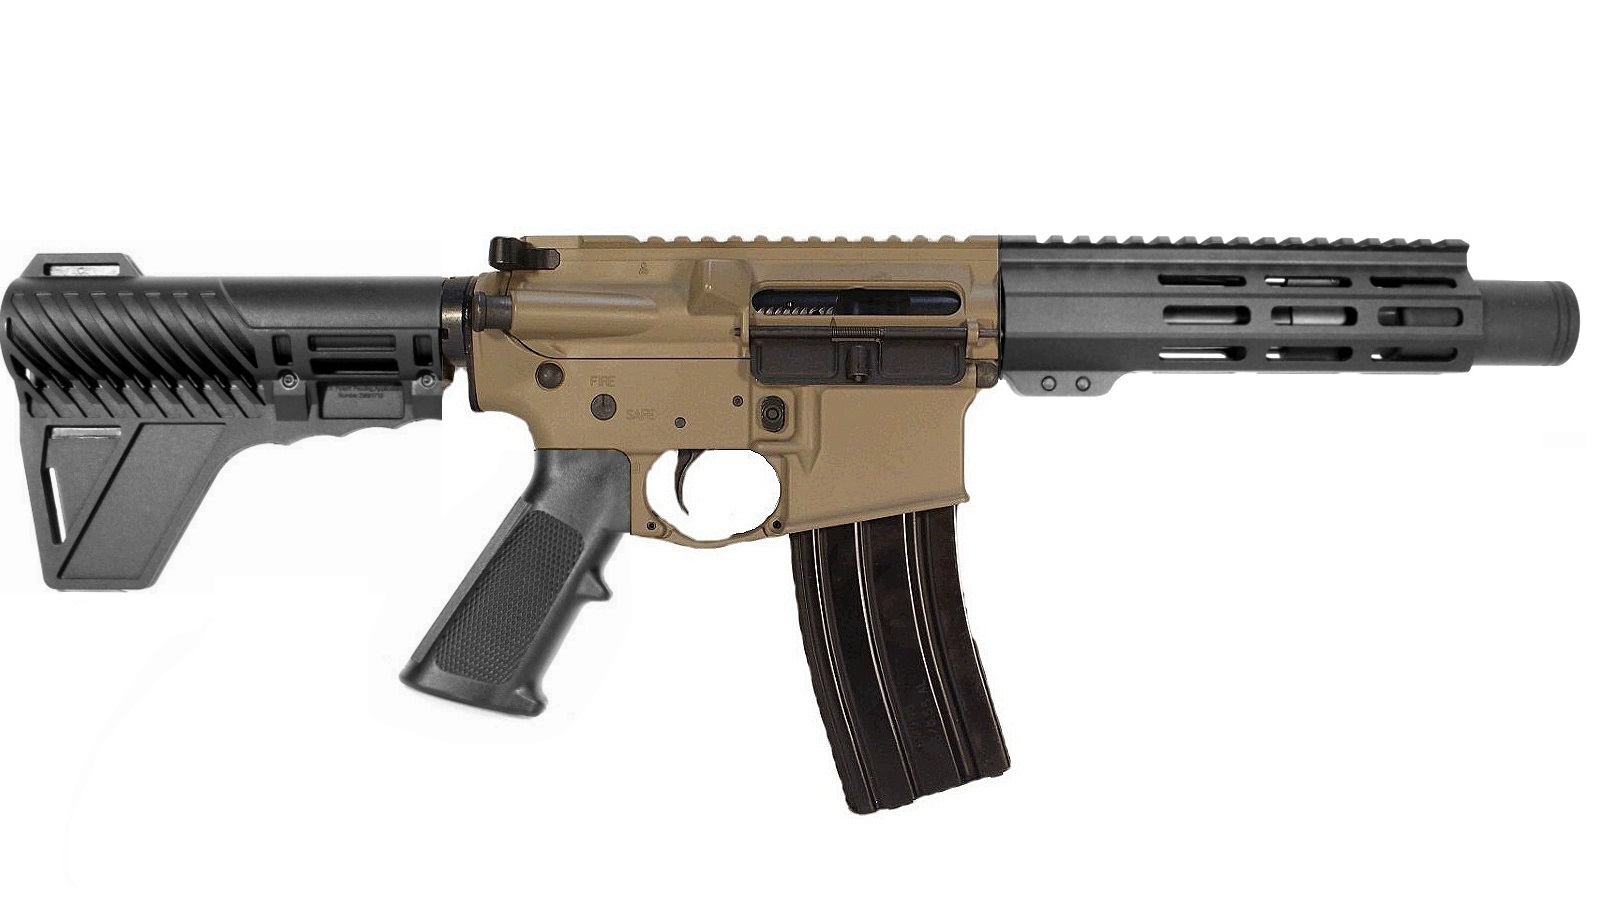 6 inch 300 Blackout AR-15 Pistol | Great Self Defense Weapon